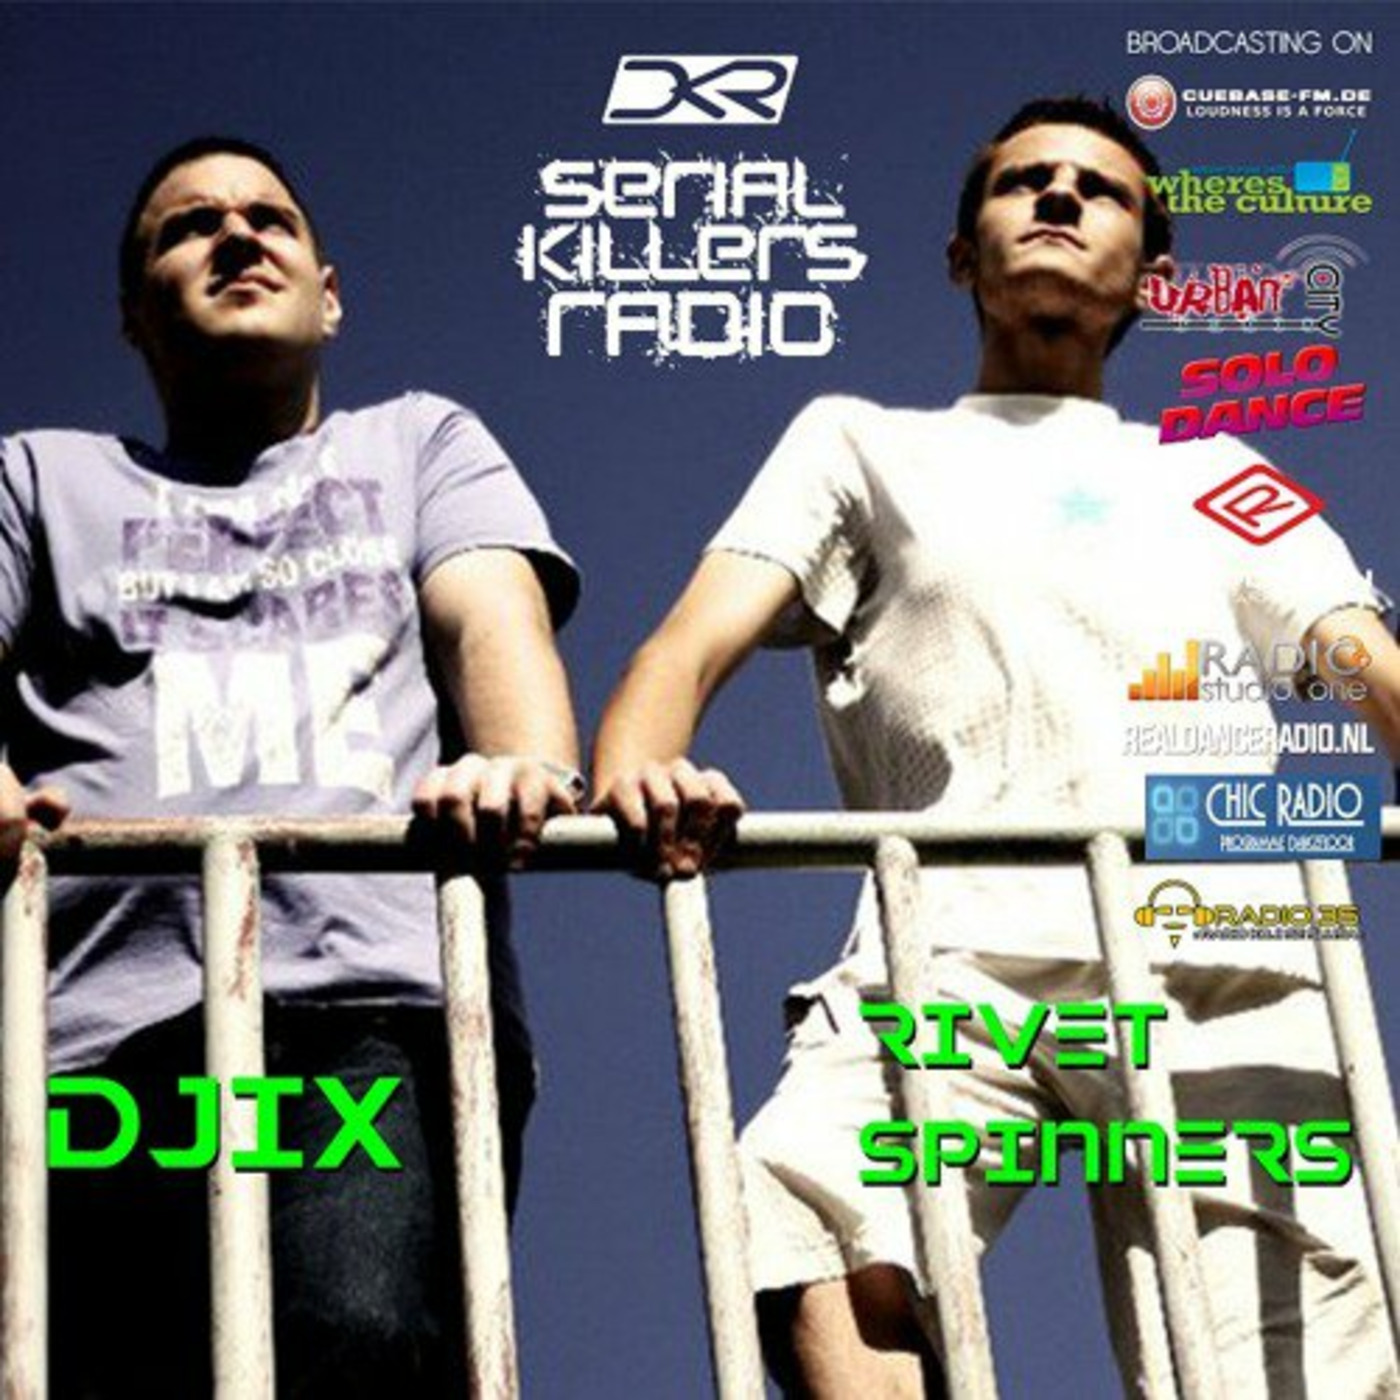 DKR Serial Killers 106 (DJIX & Rivet Spinners)